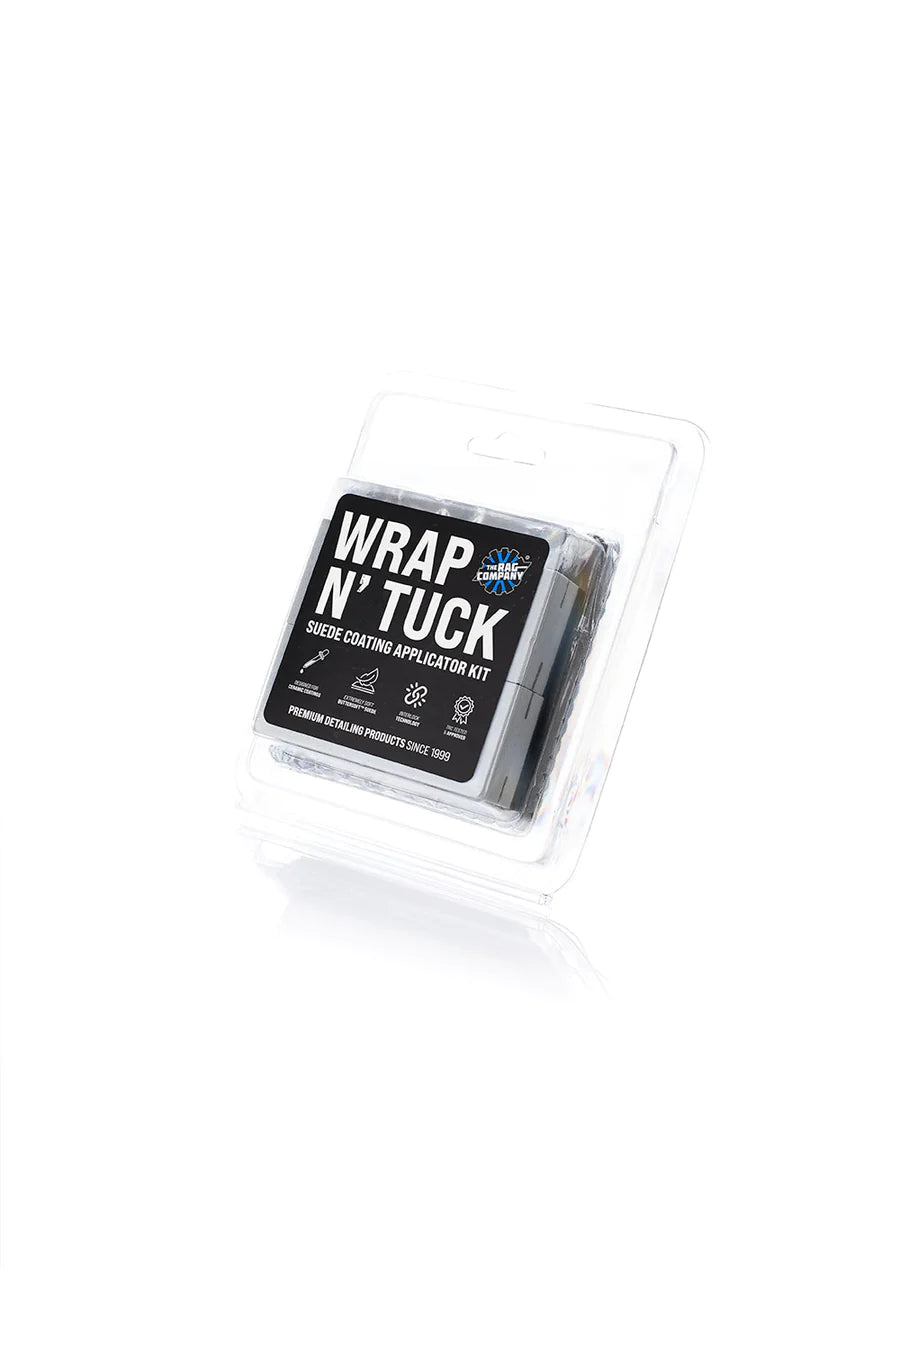 THE RAG COMPANY - Wrap N' Tuck Suede Coating Applicator Kit (Ensemble application céramique)